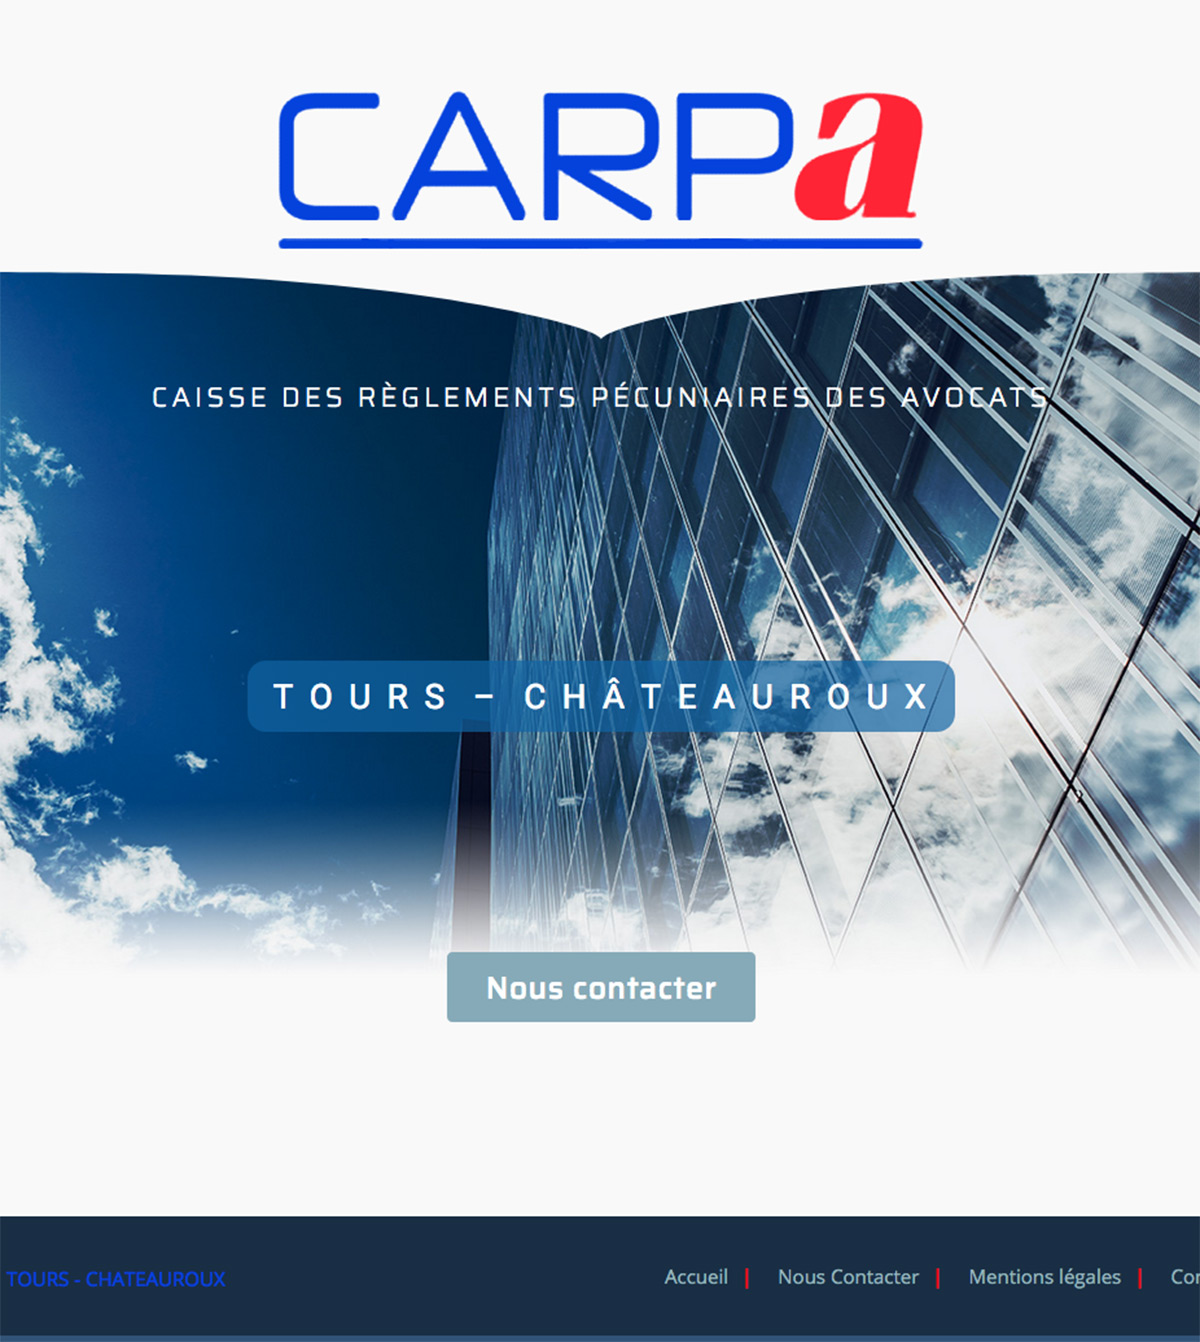 Carpa Tours Chateauroux